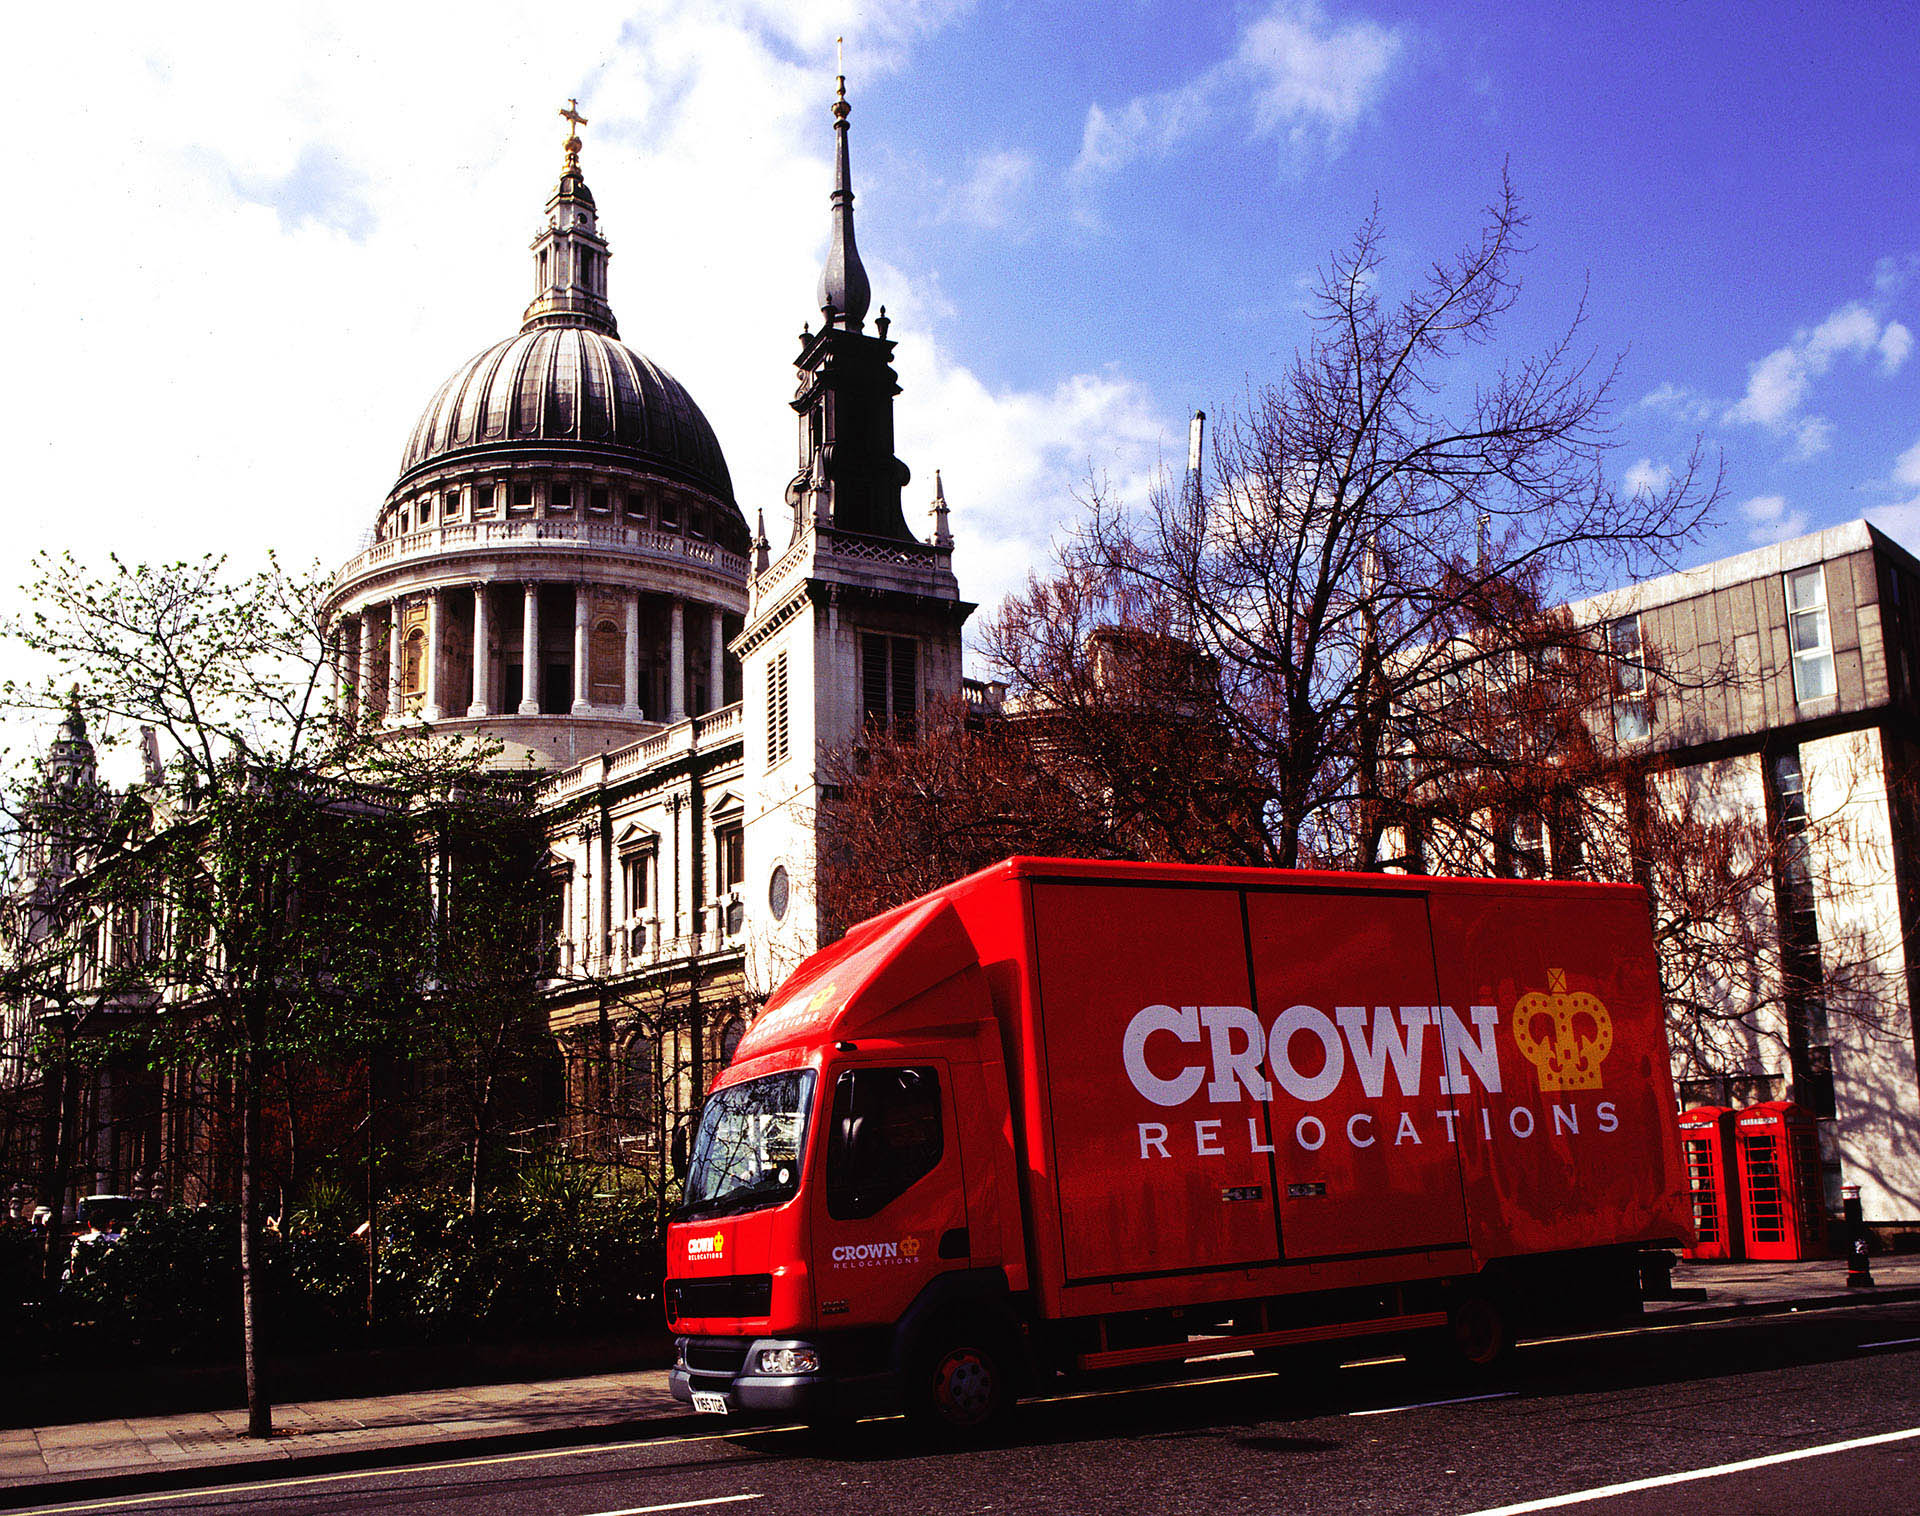 Crown Relocations van in central London